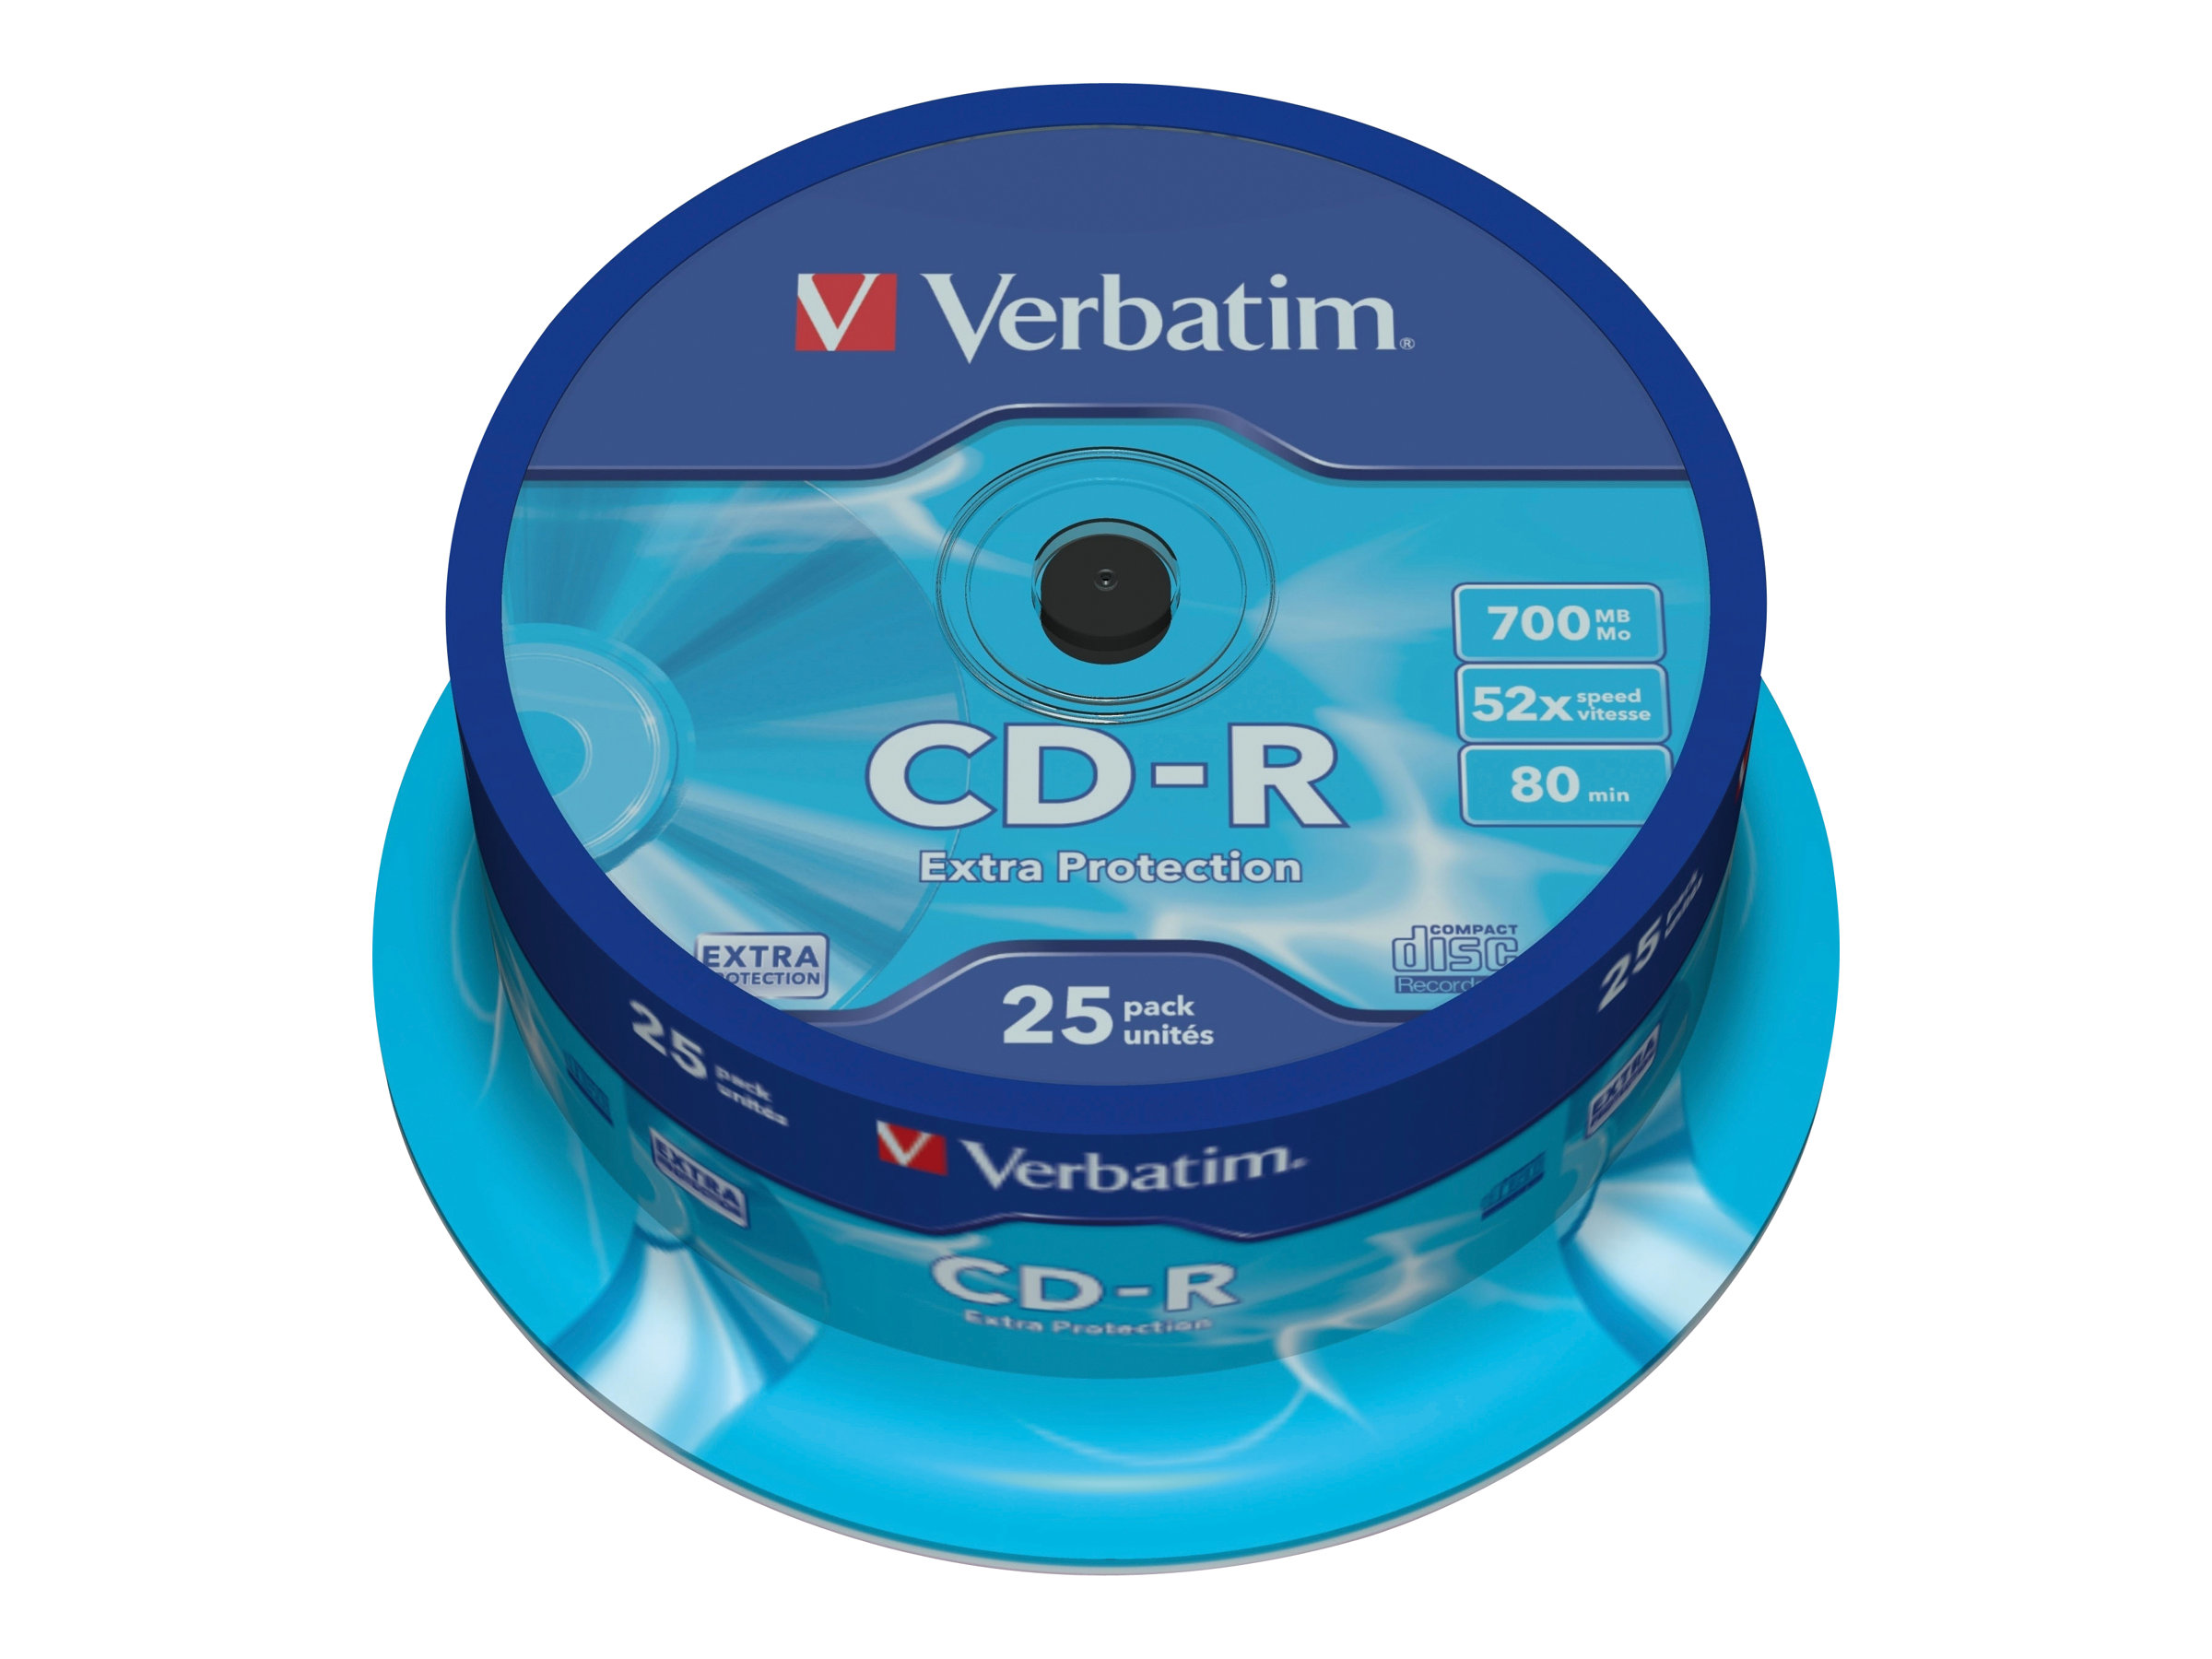 CD-R  Verbatim 700MB 25pcs Pack 52x Spindel extra protect retail